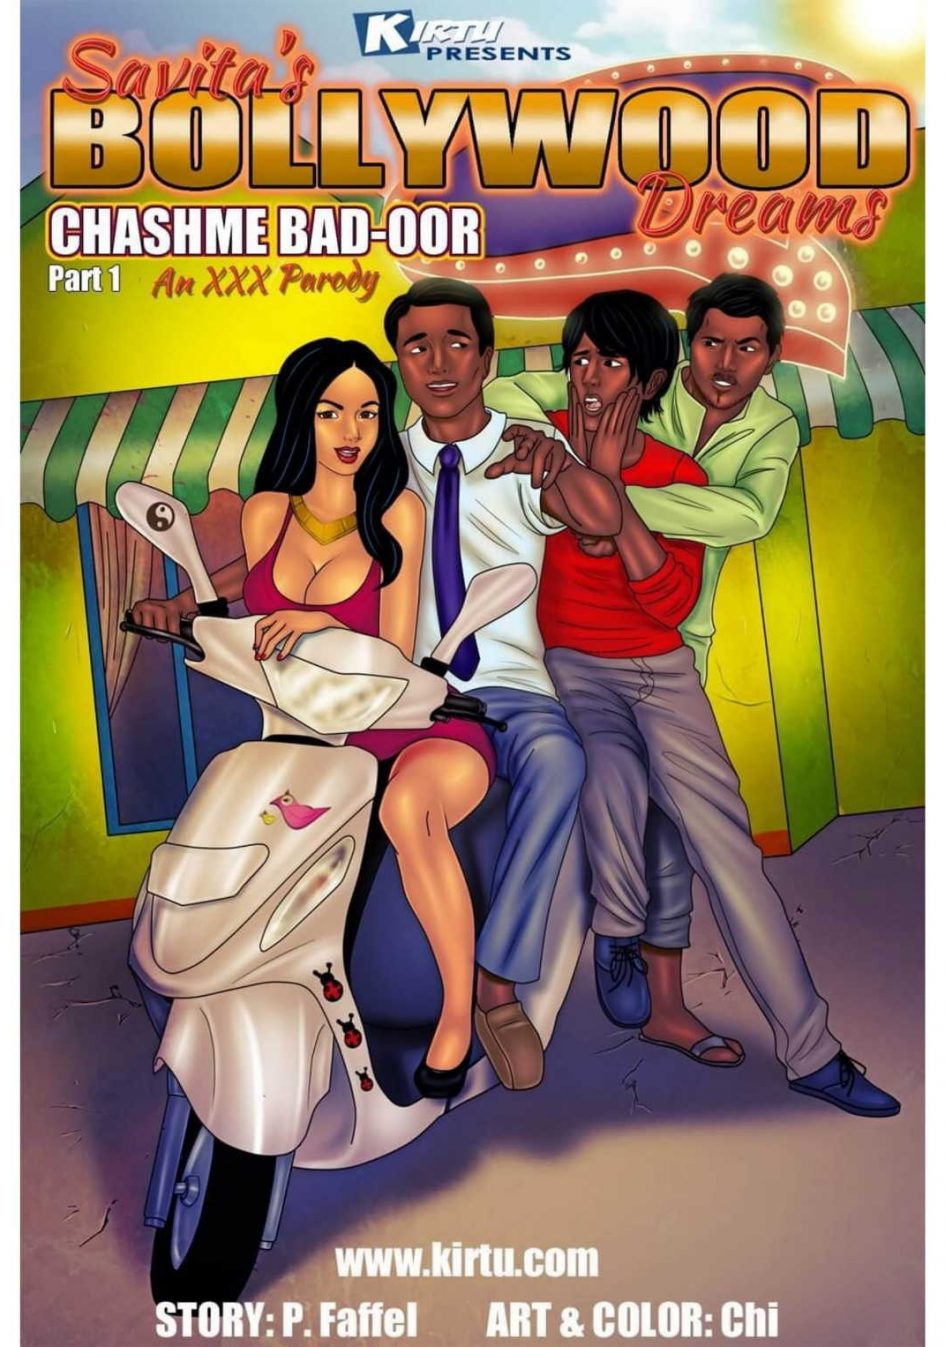 Savita Bhabhi Bollywood Dreams Episode 03 English – Chashme Bad-Oor - 3 - Fsicomics